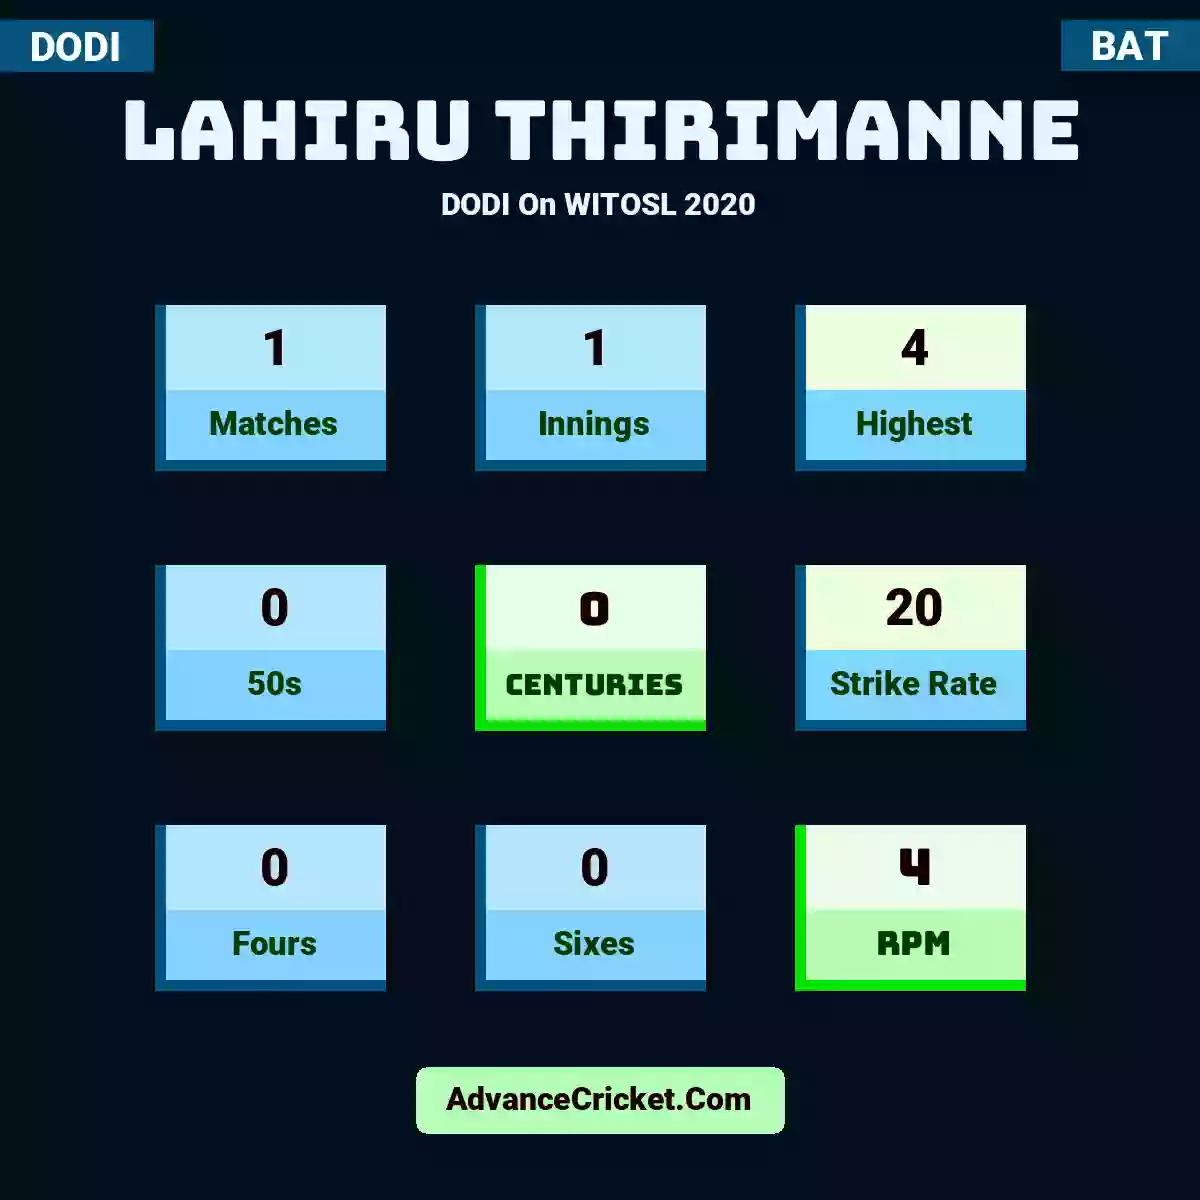 Lahiru Thirimanne DODI  On WITOSL 2020, Lahiru Thirimanne played 1 matches, scored 4 runs as highest, 0 half-centuries, and 0 centuries, with a strike rate of 20. L.Thirimanne hit 0 fours and 0 sixes, with an RPM of 4.